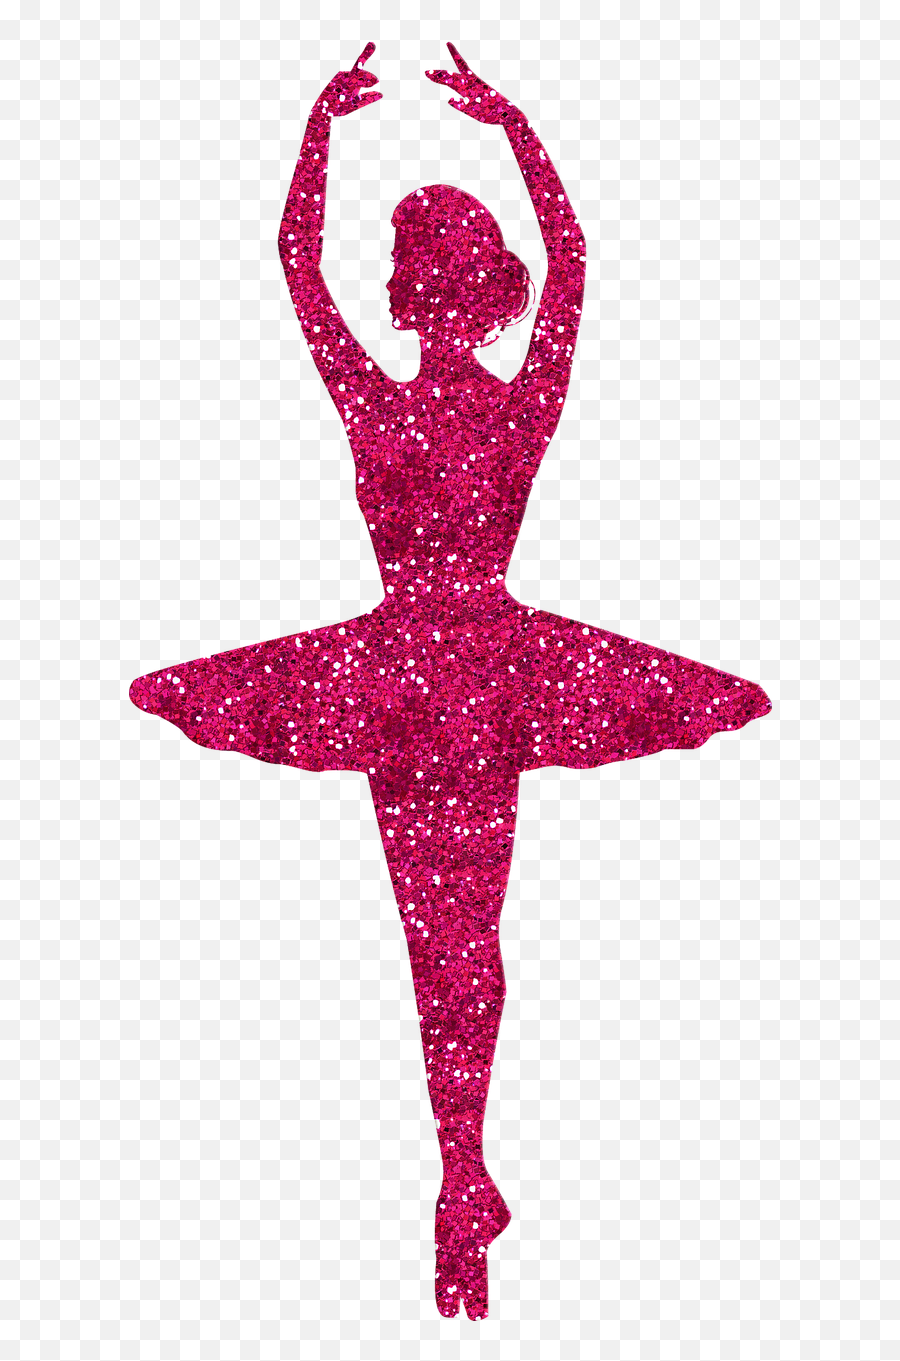 Ballerina Glitter Pink - Free Image On Pixabay Dancer Silhouette In Glitter Png,Ballerina Png